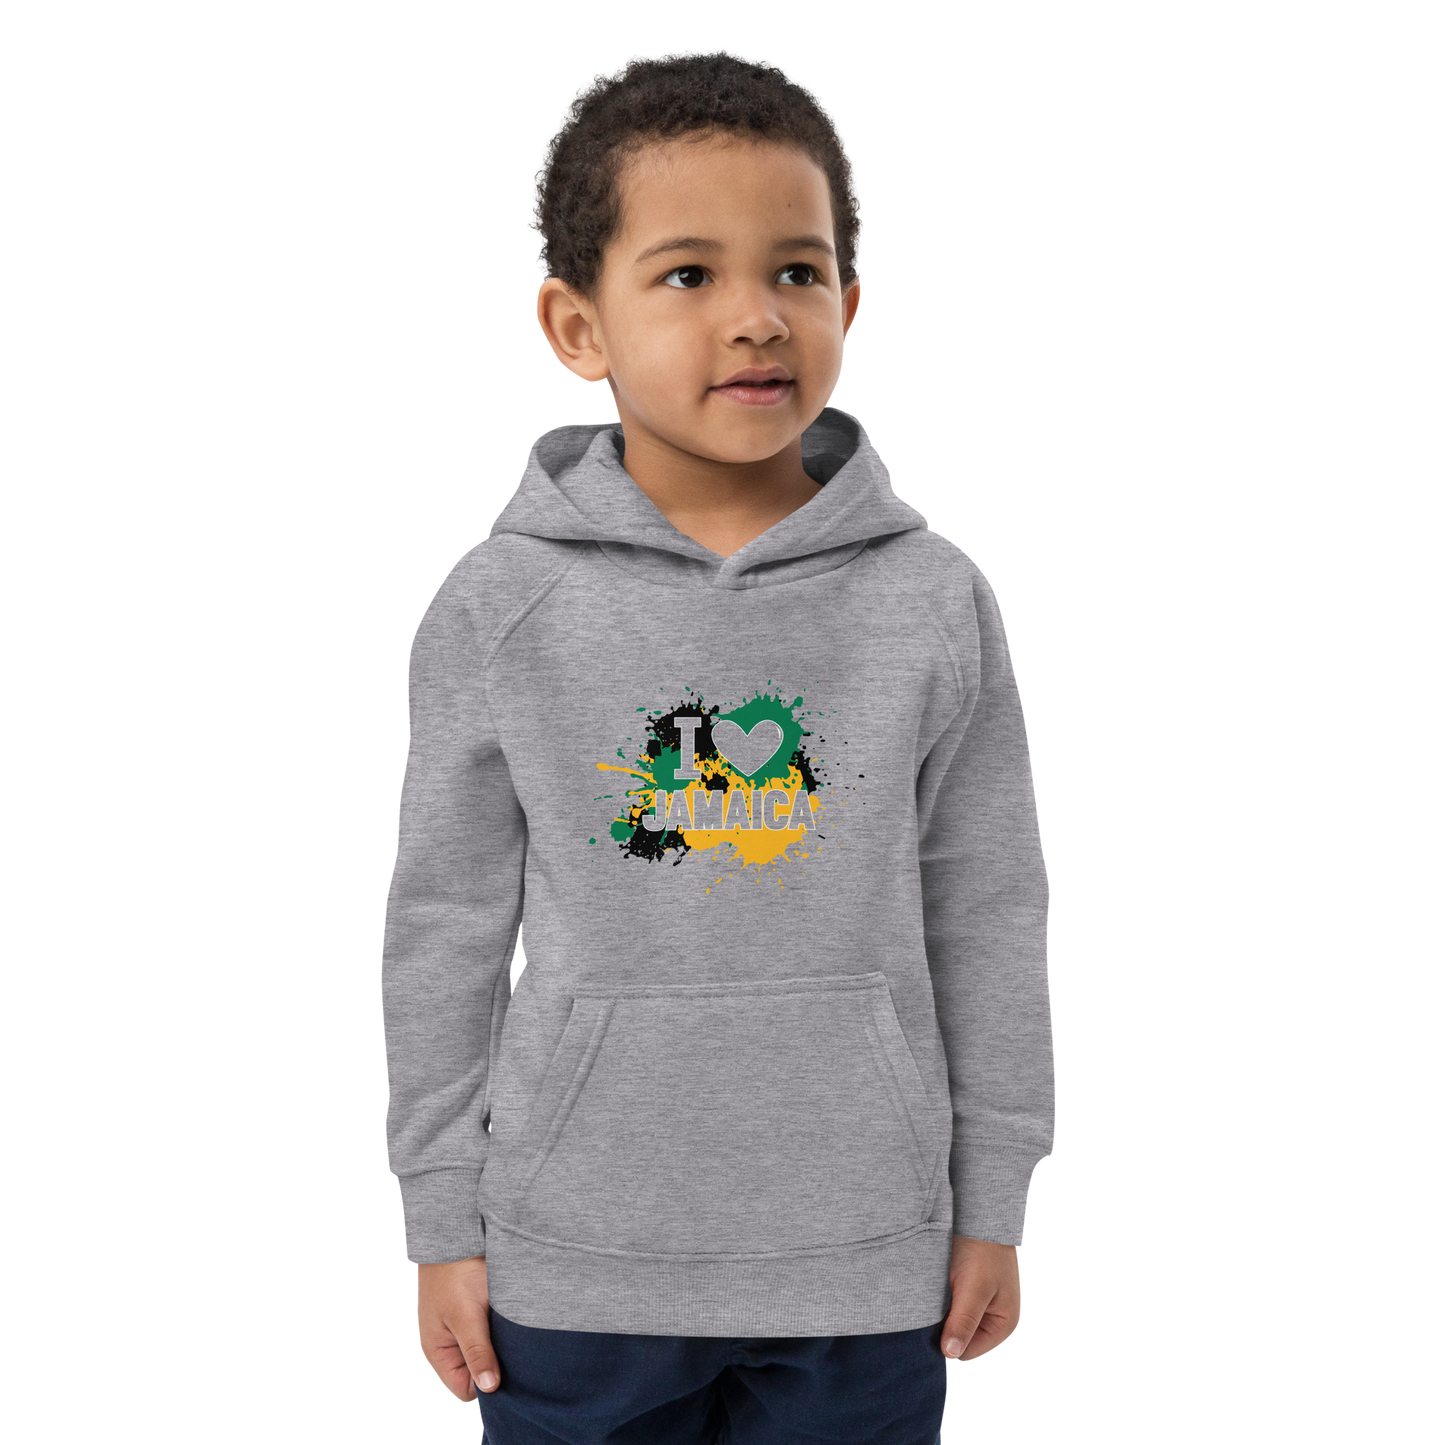 Kids eco "I <3 Jamaica" hoodie